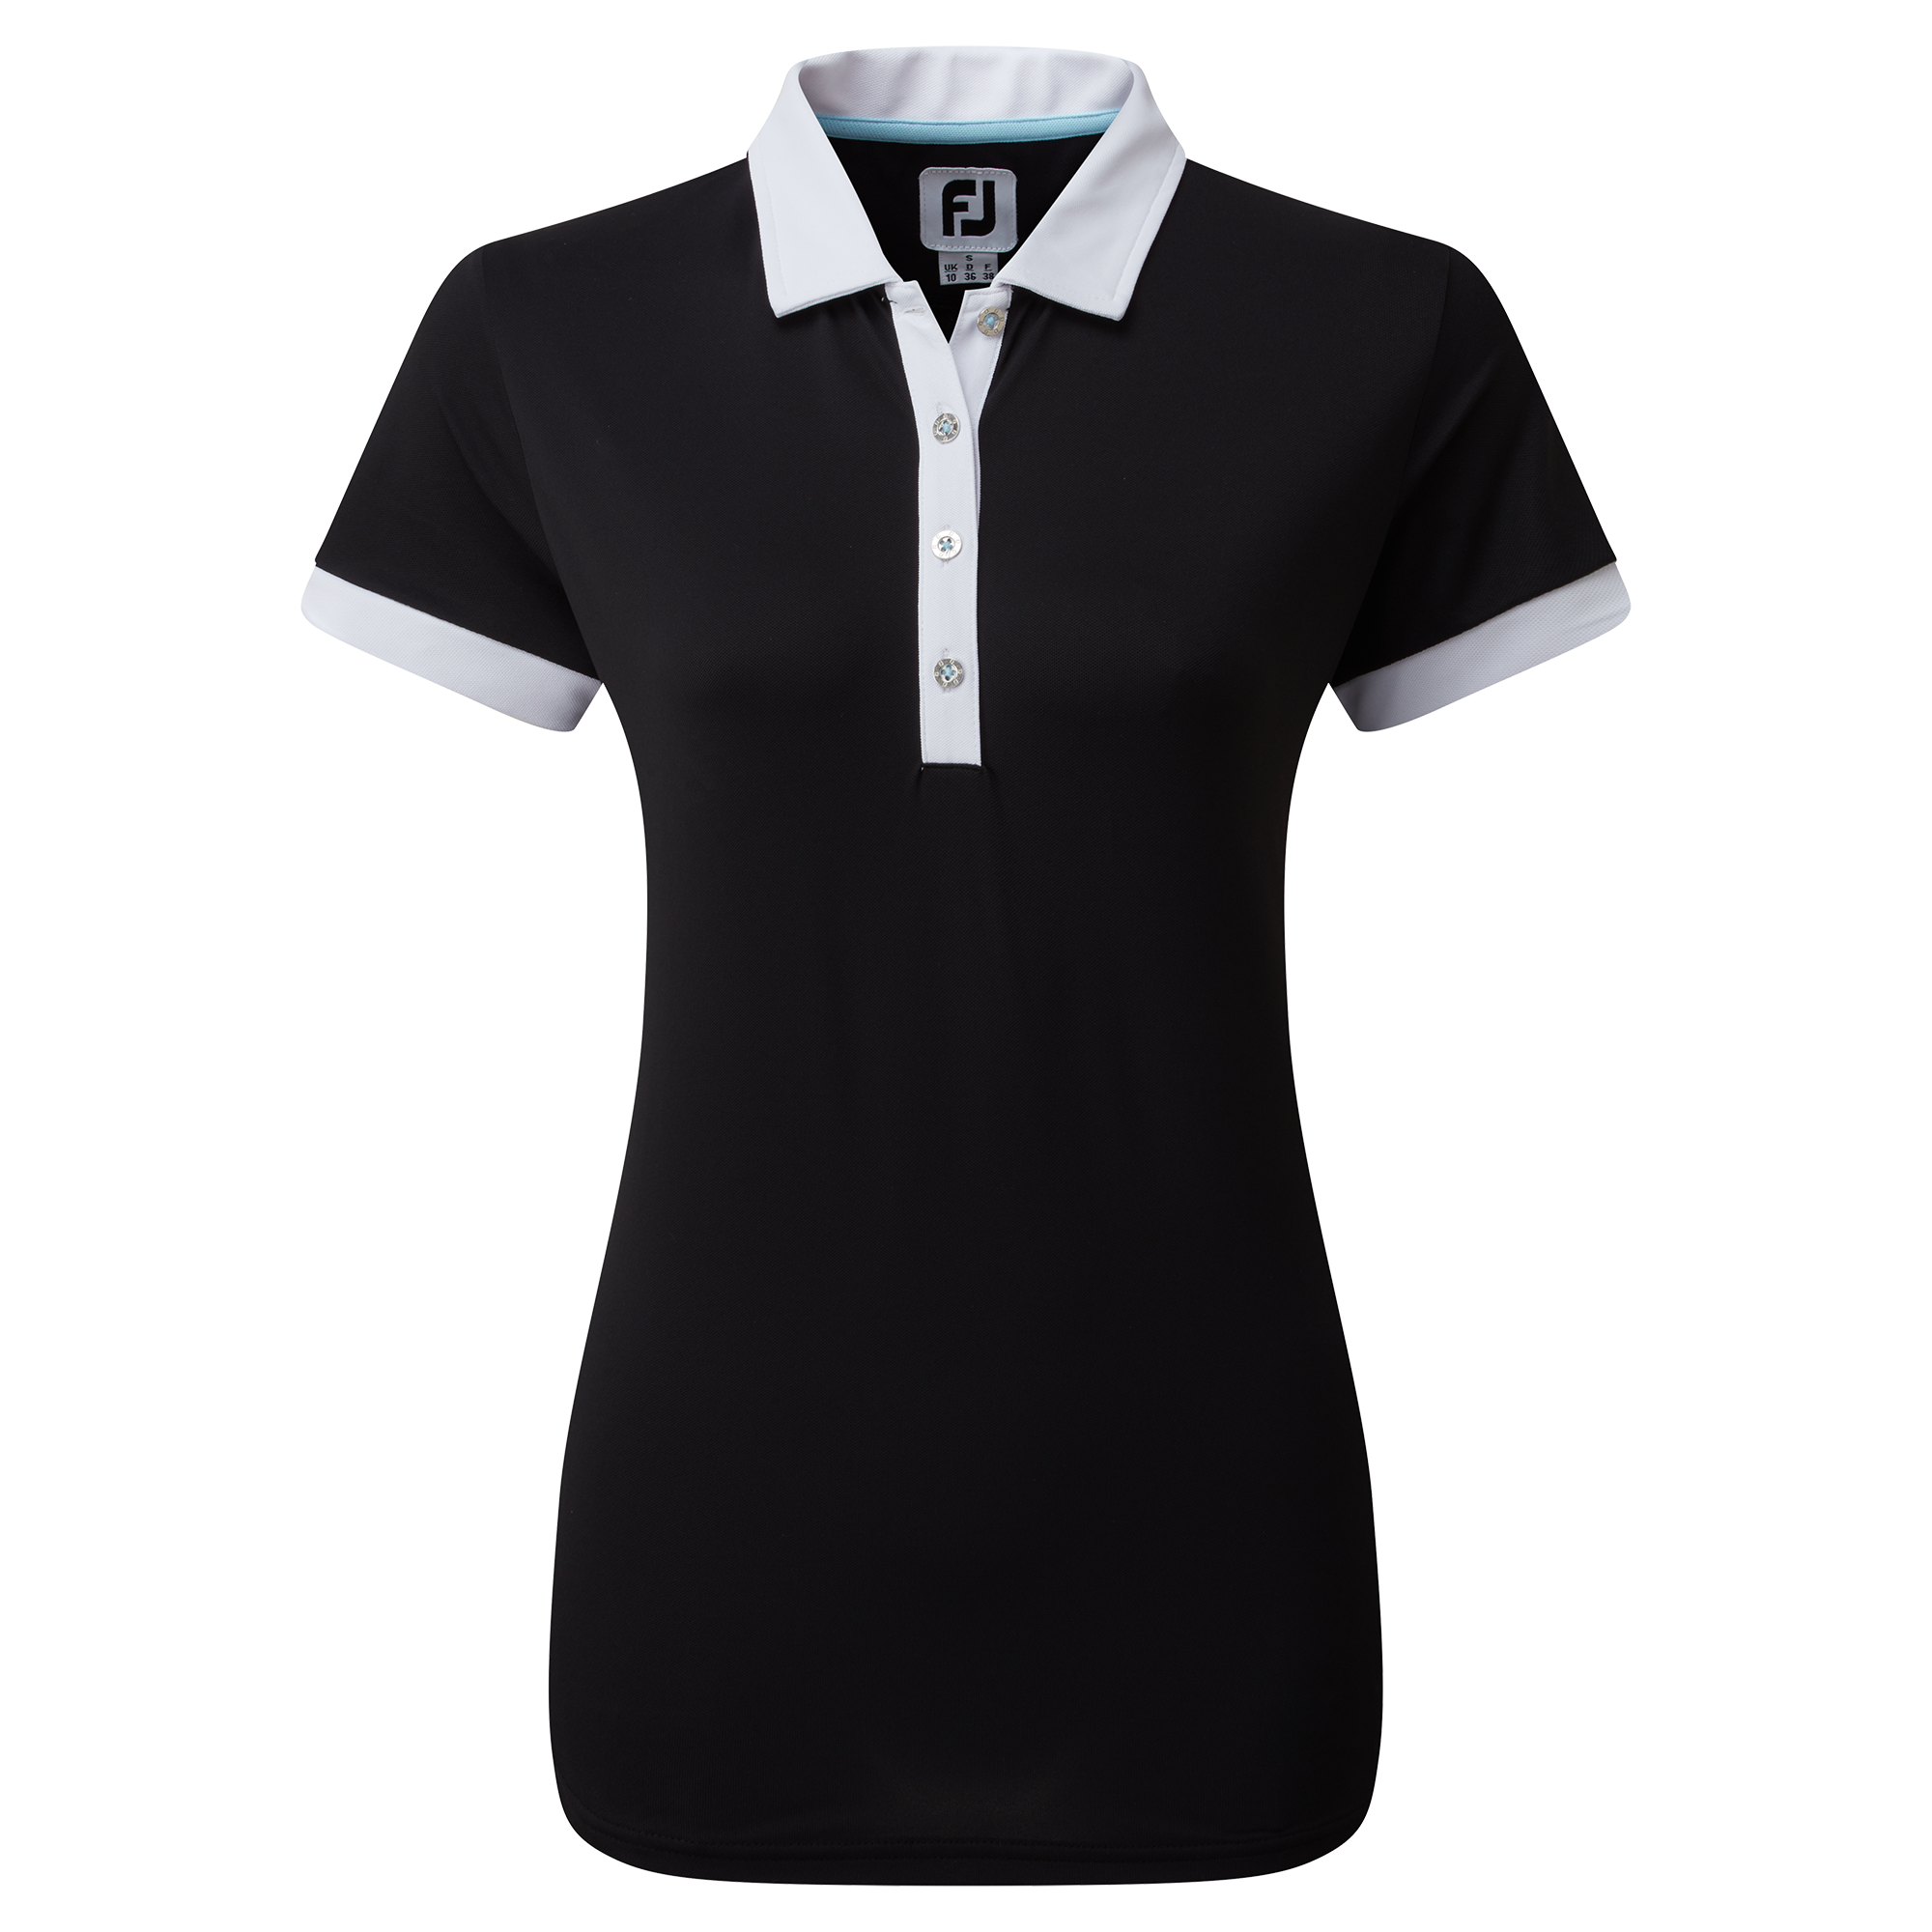 FootJoy Colour Block Pique dámské golfové triko, černé, vel. S